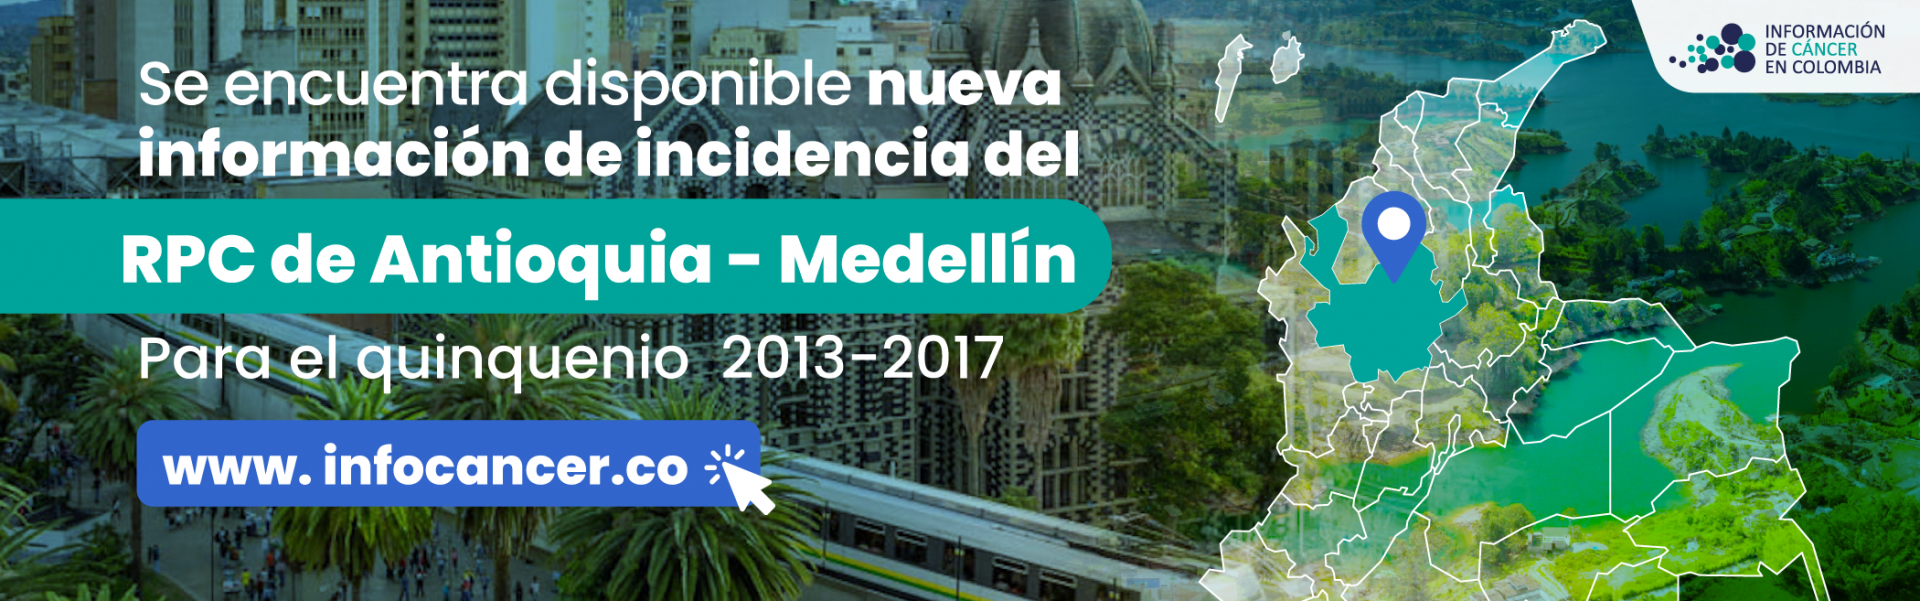 Imagen de RPC Antioquia-Medellín quinquenio 2013-201